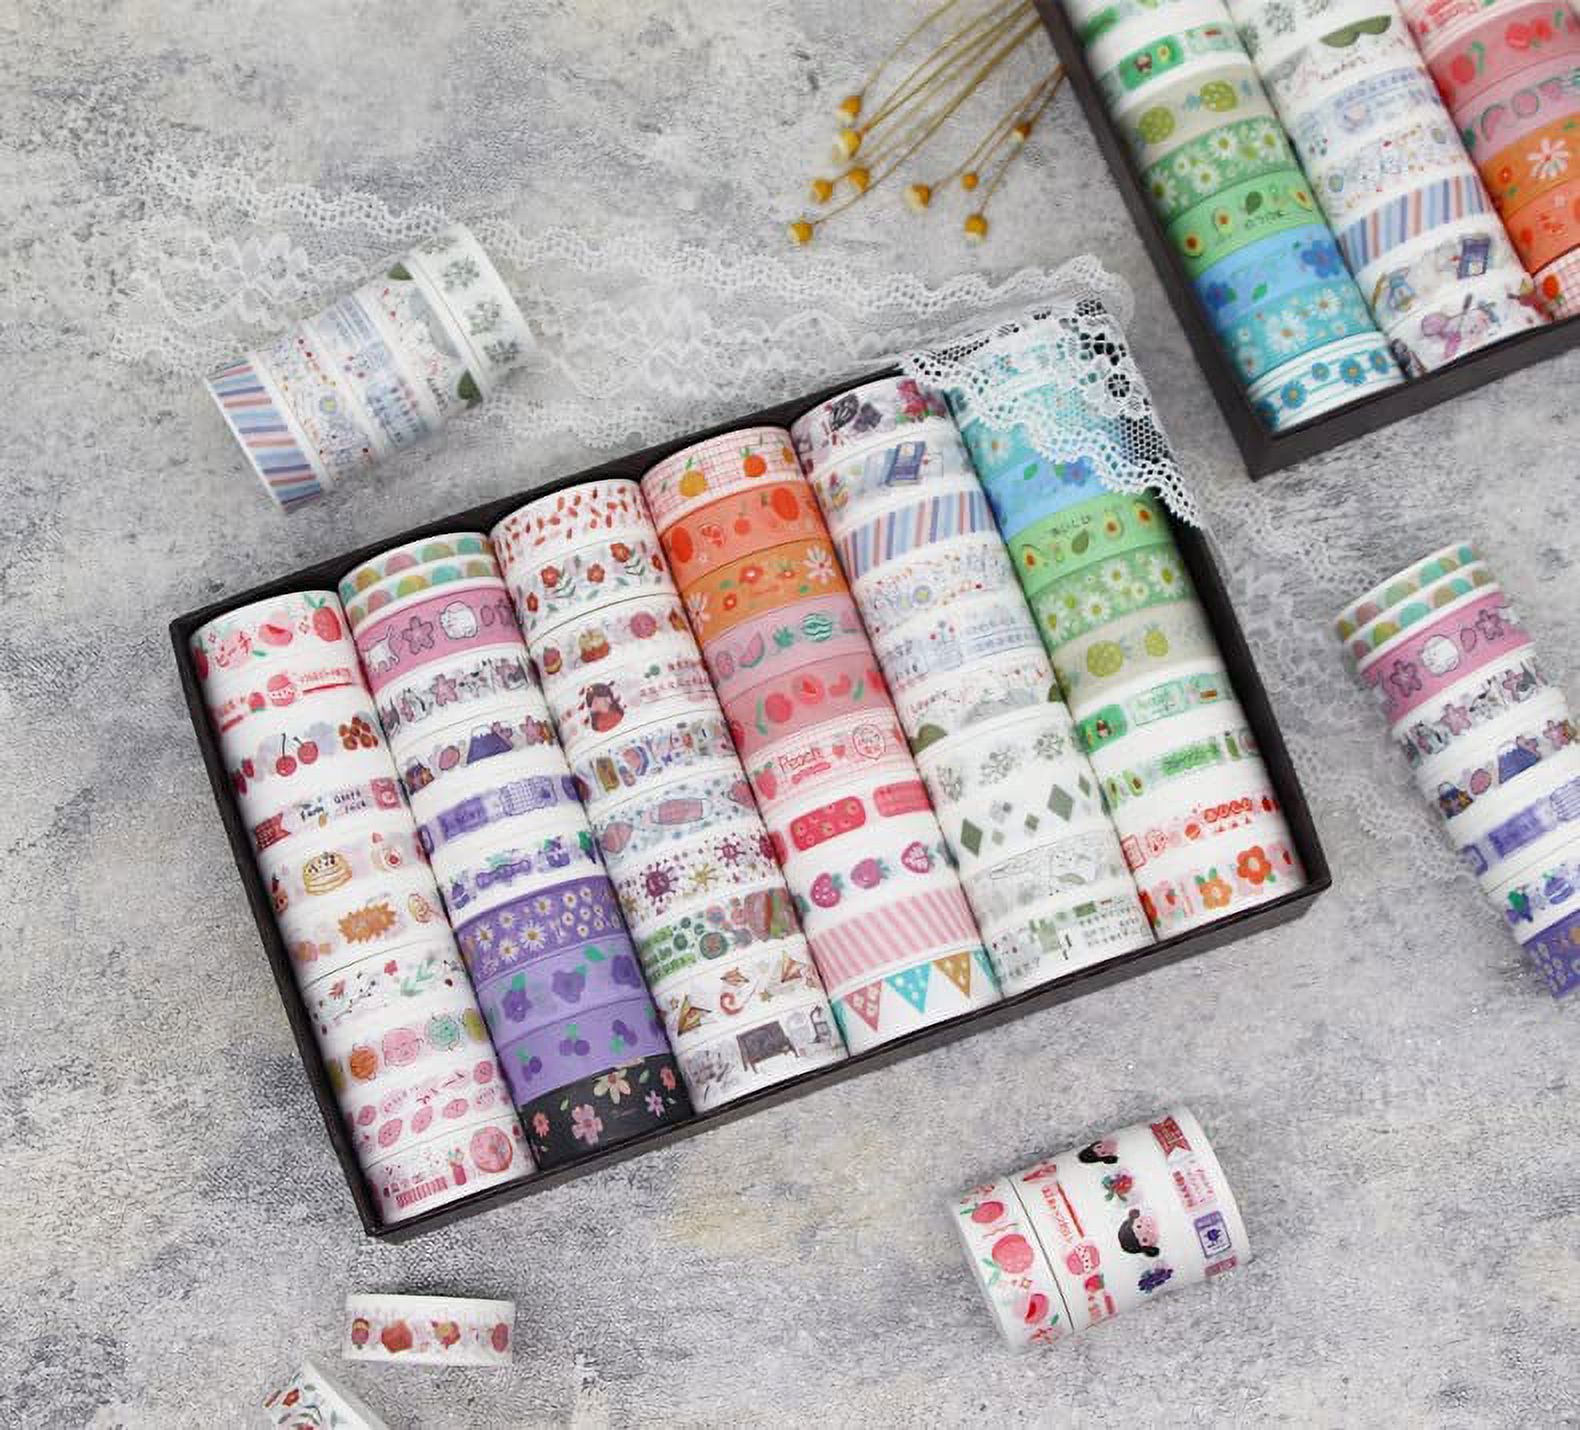 Danceemangoos Kawaii Washi Tape Set - 60 Rolls Cute Washi Paper Masking Tape Set, DIY Decorative Stickers for Journaling, Scrapbooking, Crafts, School